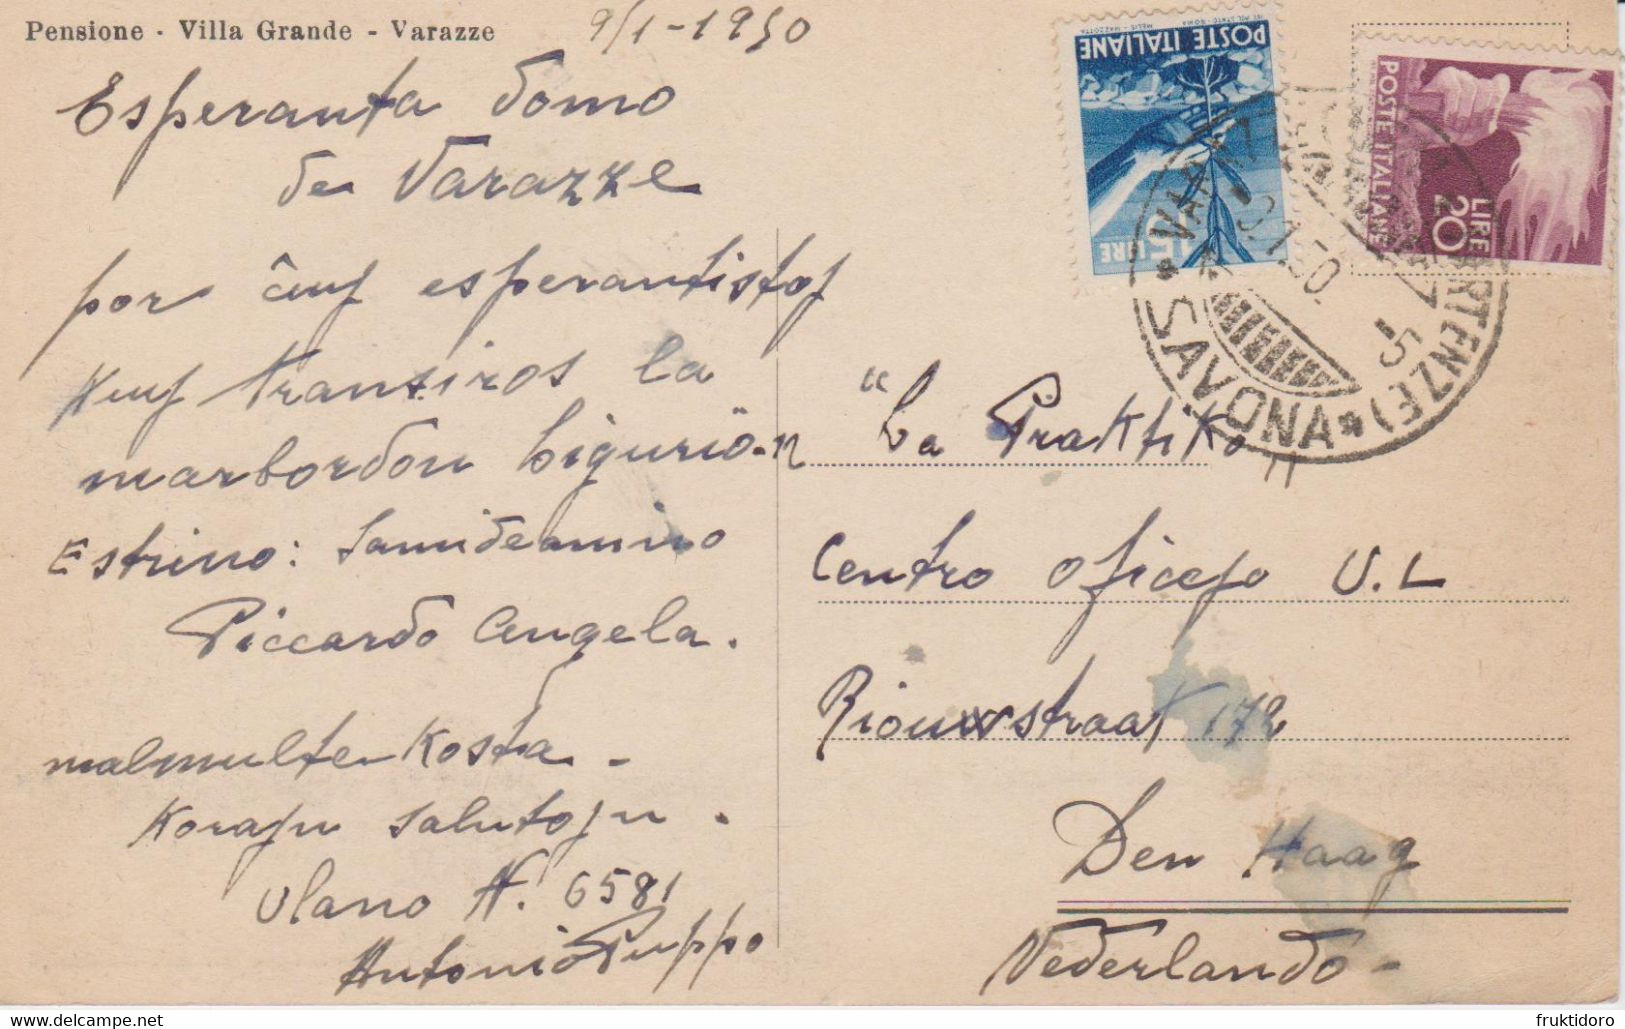 AKEO Card About Esperanto House In Varazze - Italy - Written In Esperanto 1950 - Esperanto